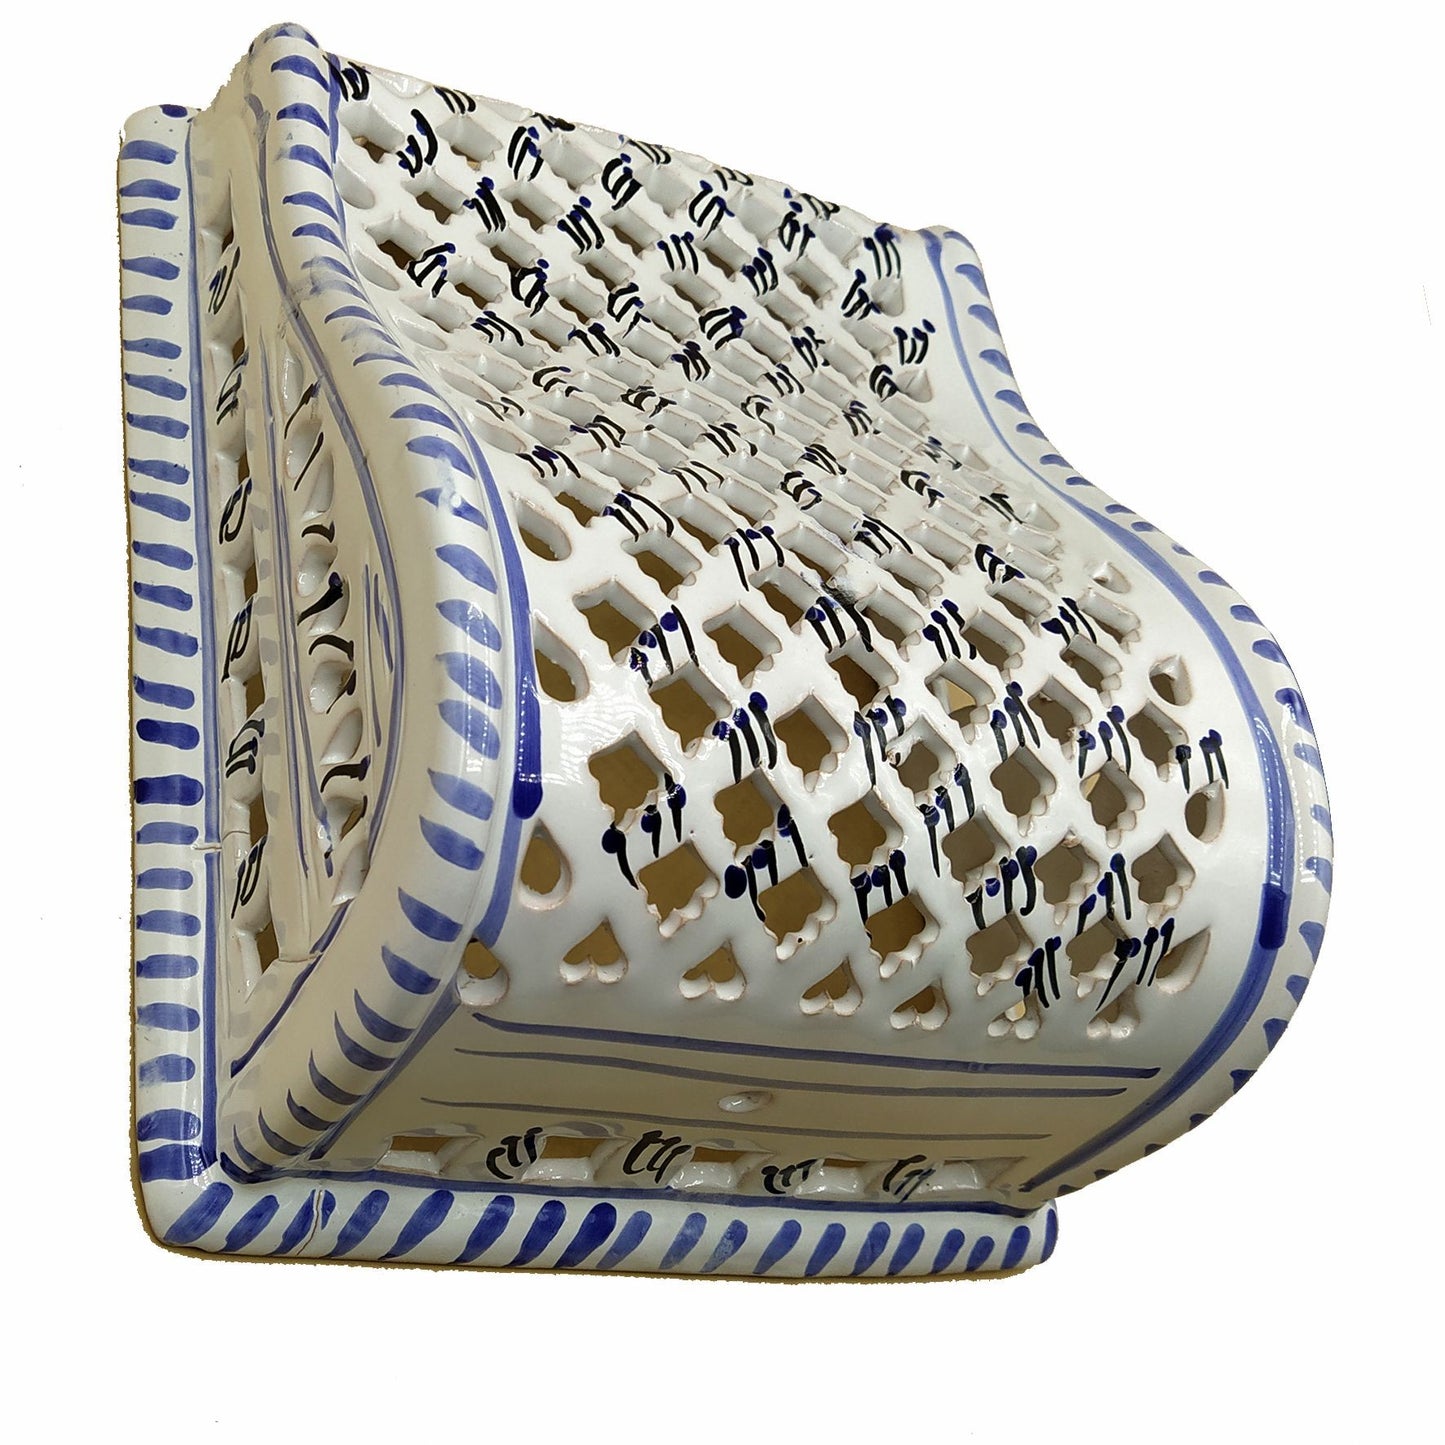 Arredo Etnico Applique Parete Lampada Terracotta Tunisina Marocchina 1201211020